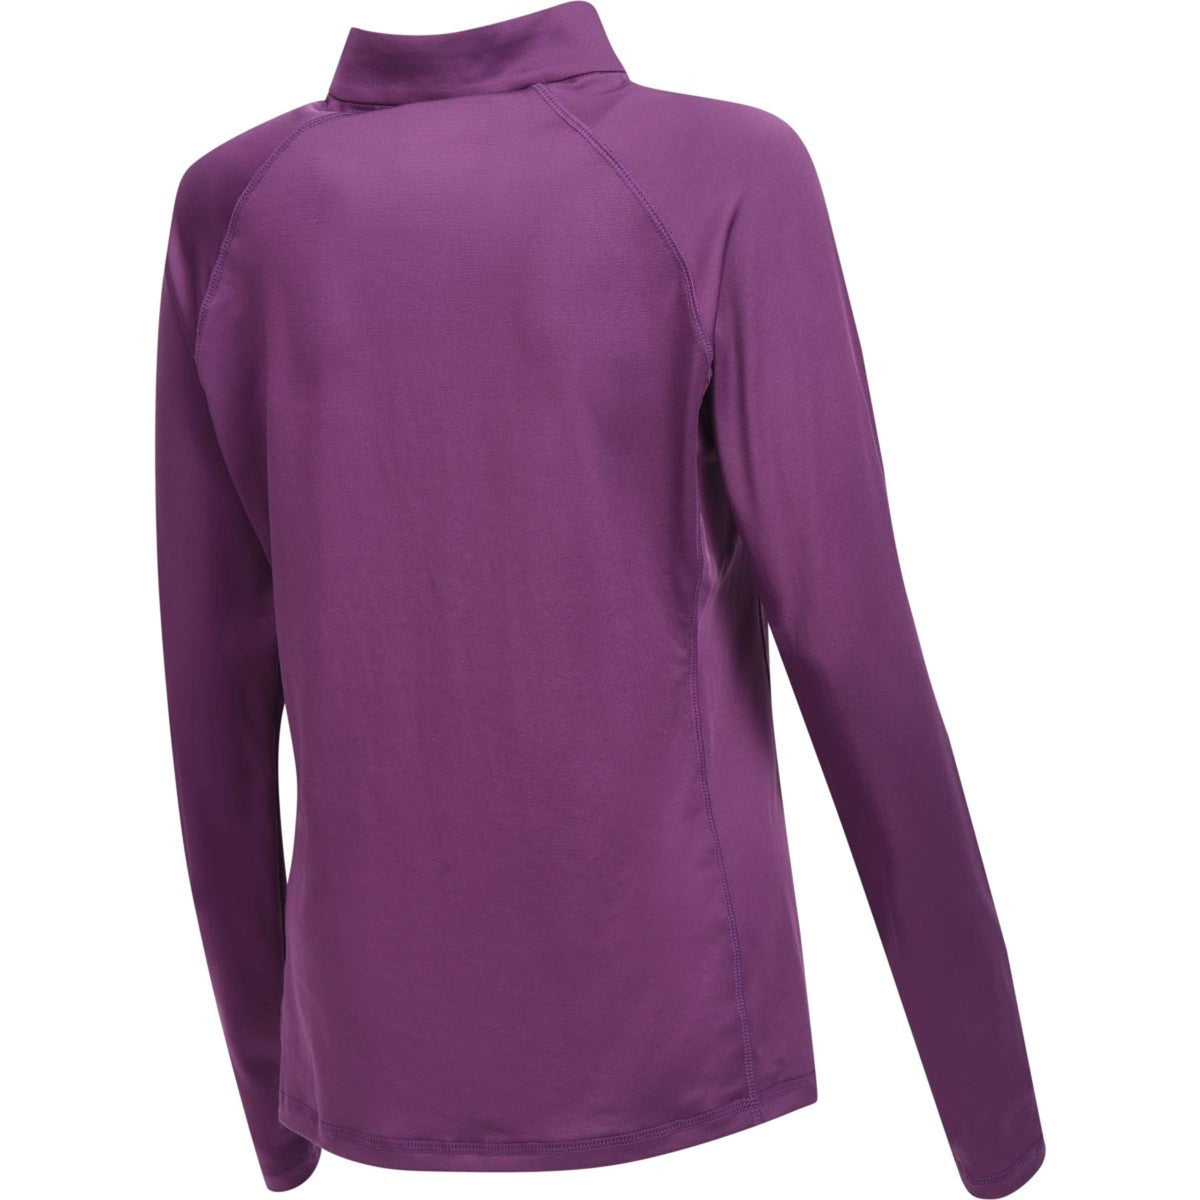 Weatherbeeta Shirt Prime Lange Armel Violett